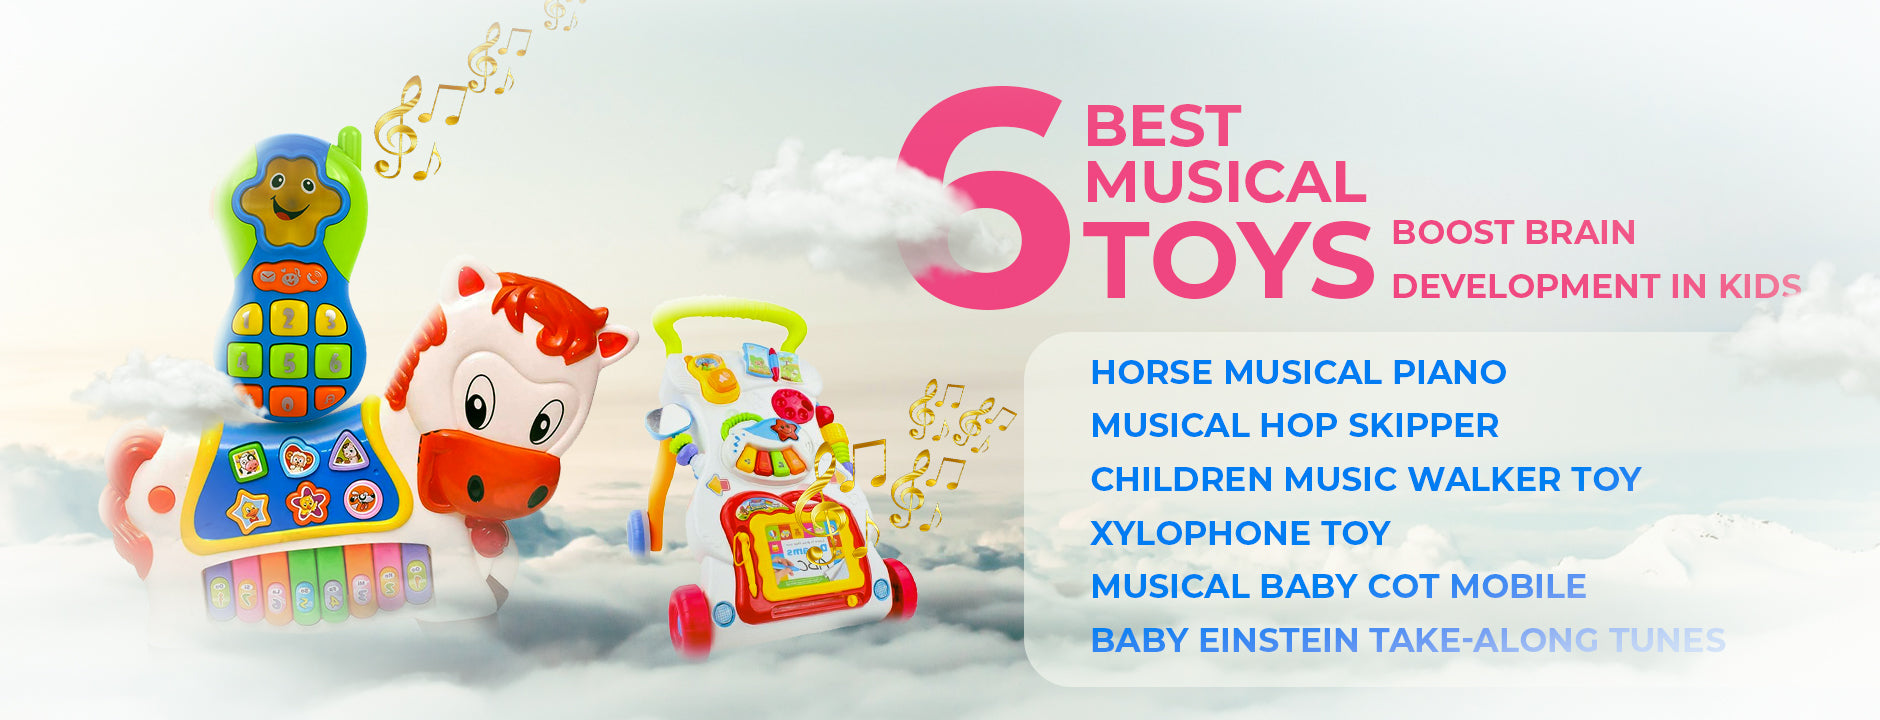 Best Musical Toys For Your Children's Brain Development